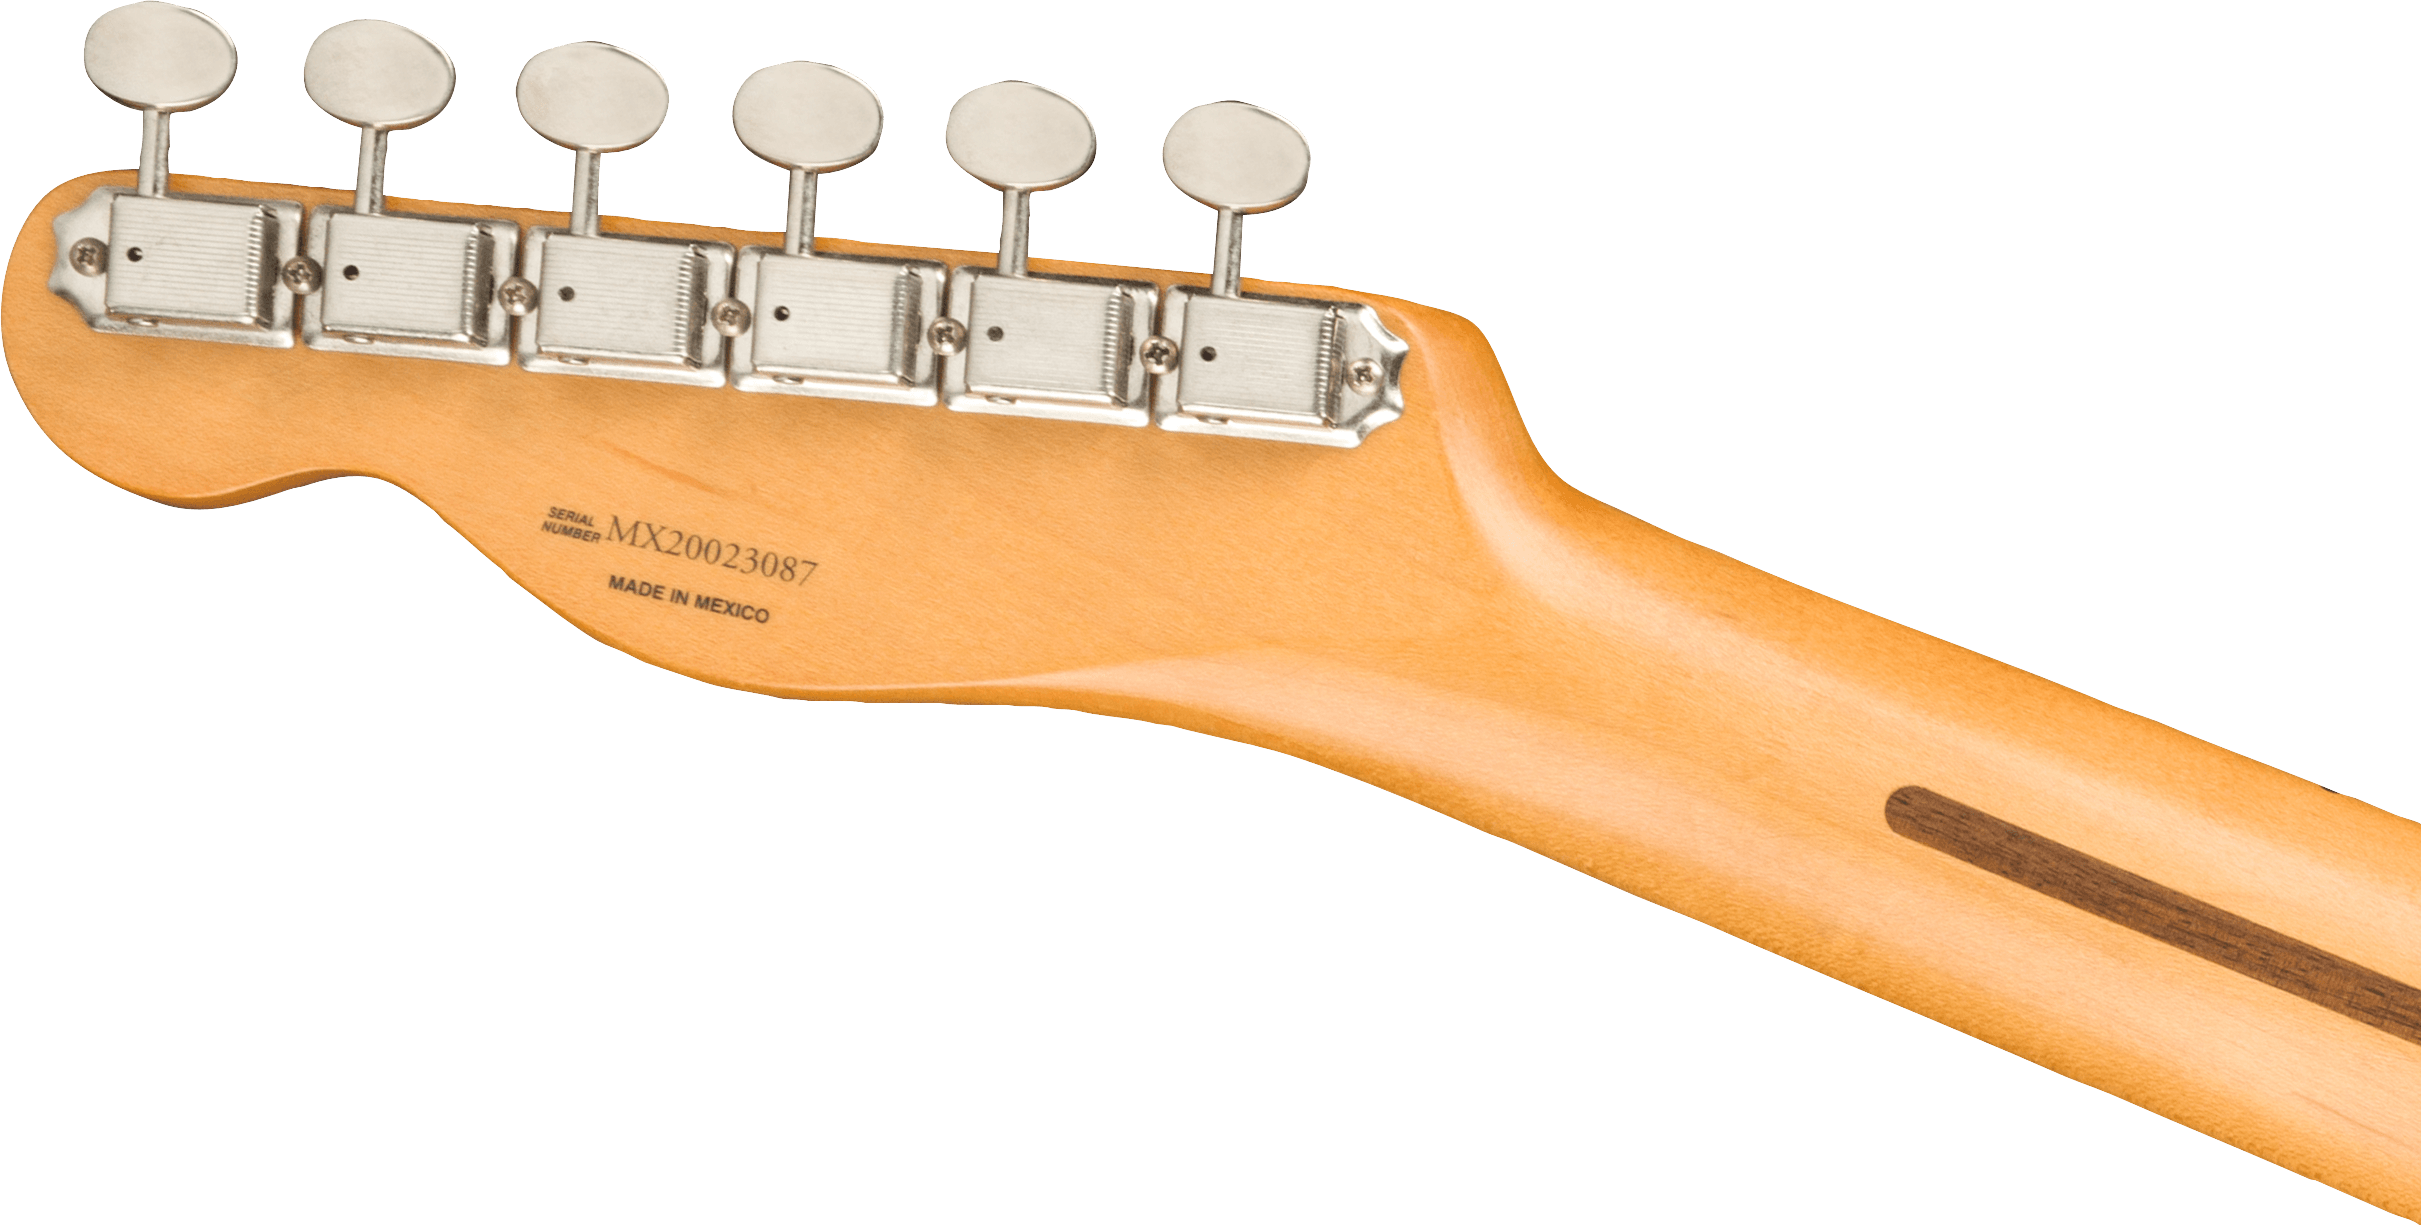 Fender Brad Paisley Esquire Maple Black Sparkle F-0140322398